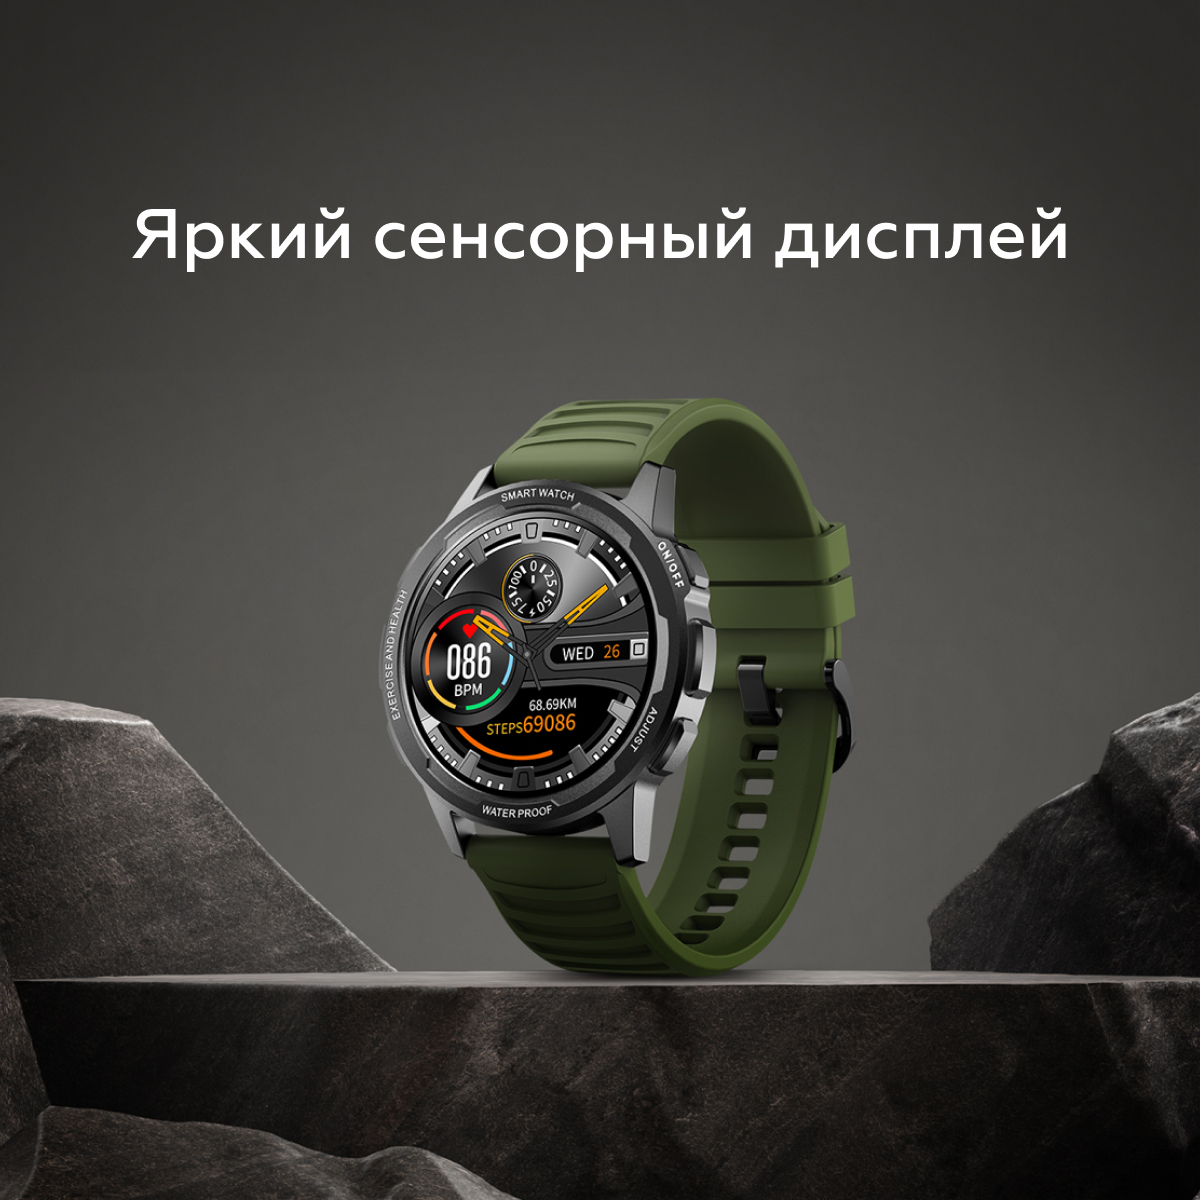 BQ watch 1.3. Часы BQ. Smart watch 1.4 BQ купить на него зарядное устройство. Часы bq watch